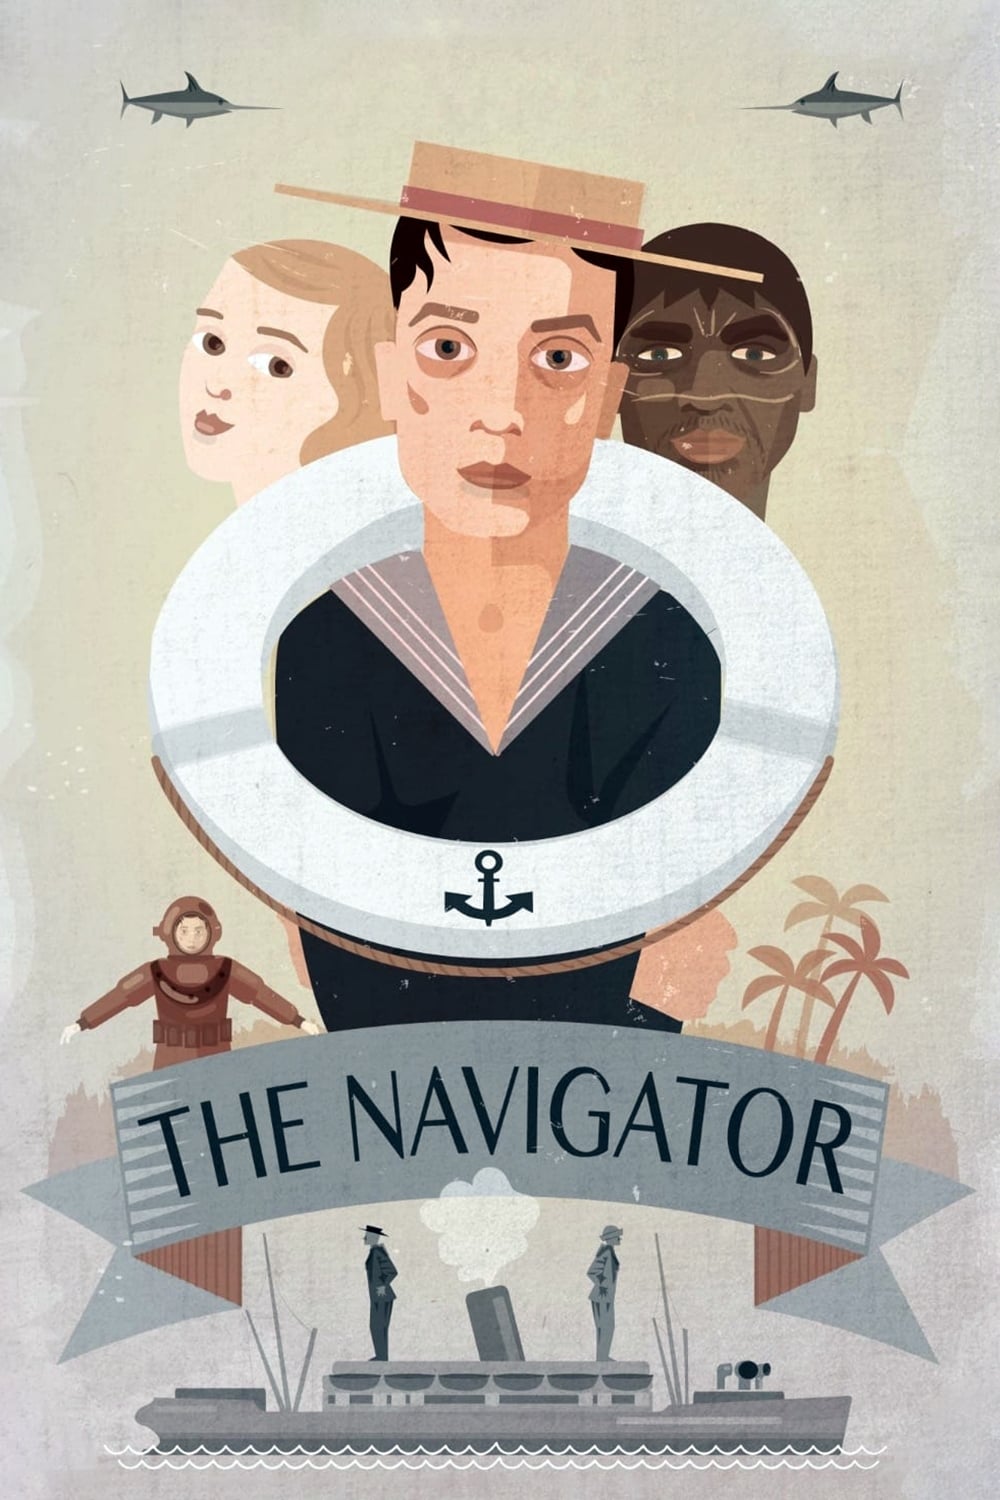 Der Navigator